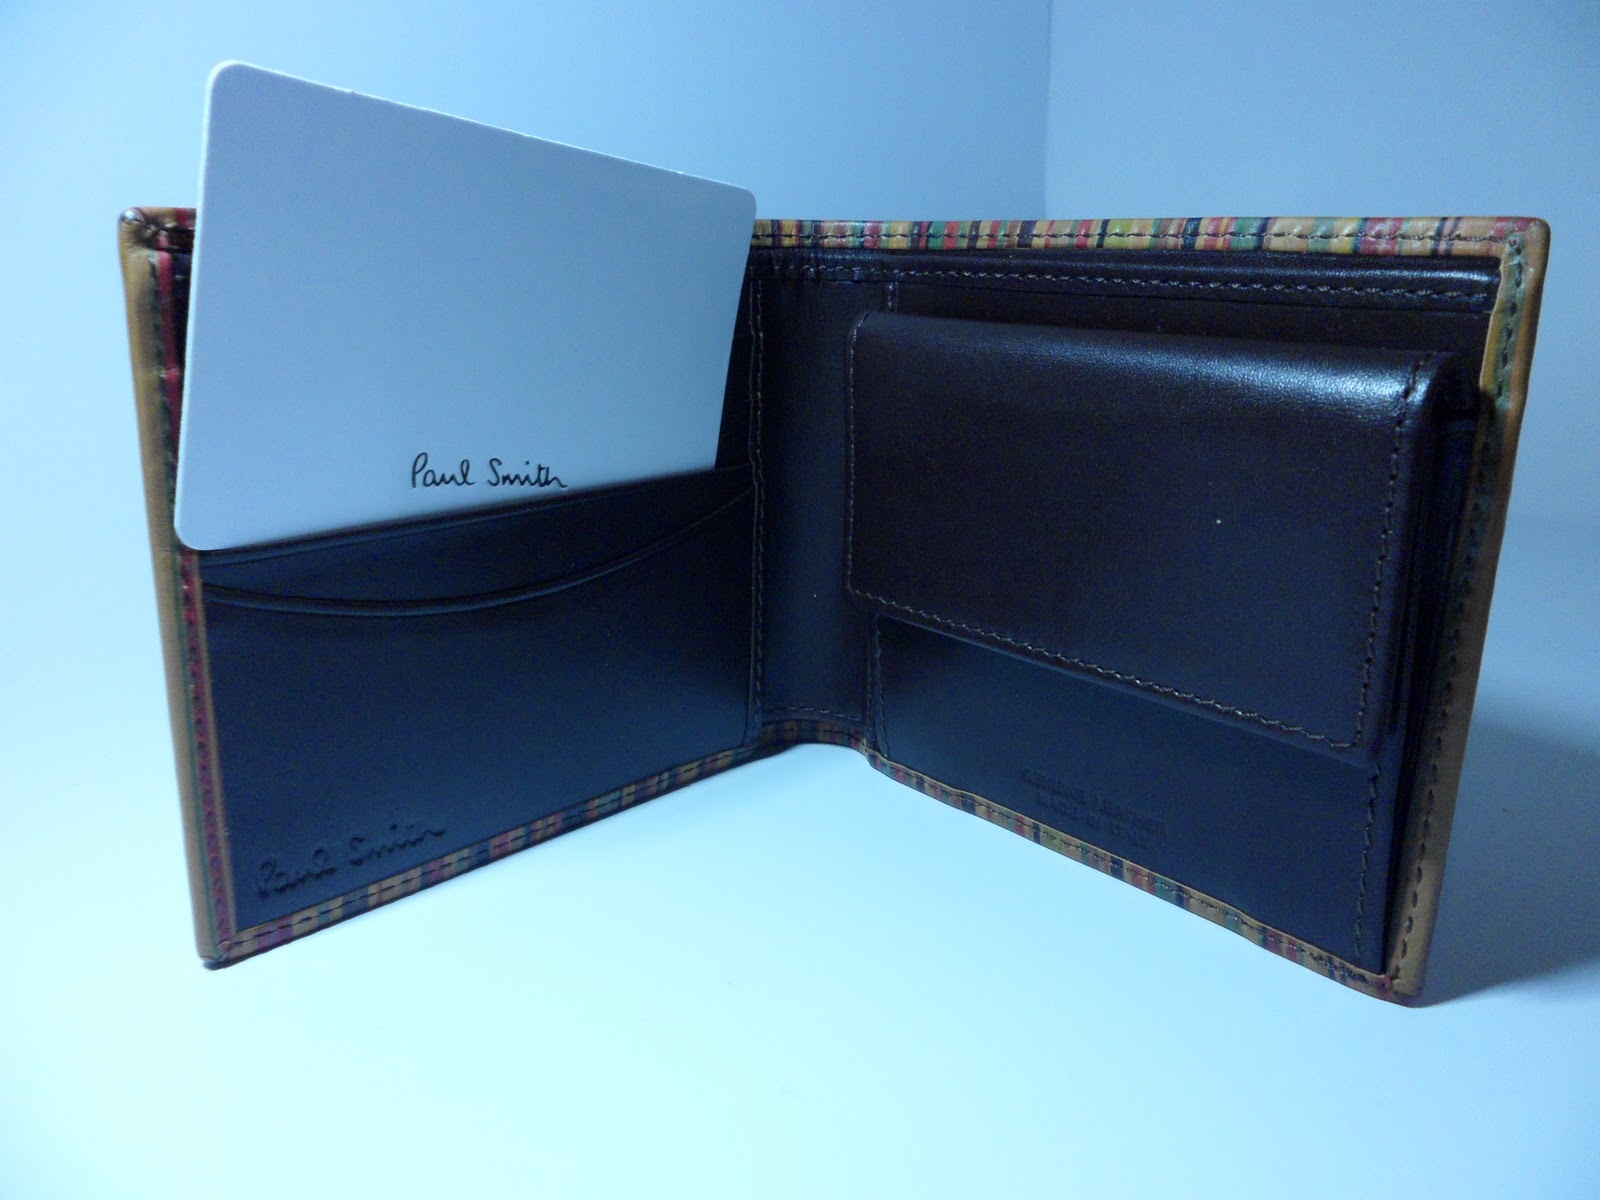 LitaRain: ขาย Paul Smith Vintage Stripe Wallet 6,900บาท ของแท้จากอังกฤษค่ะ